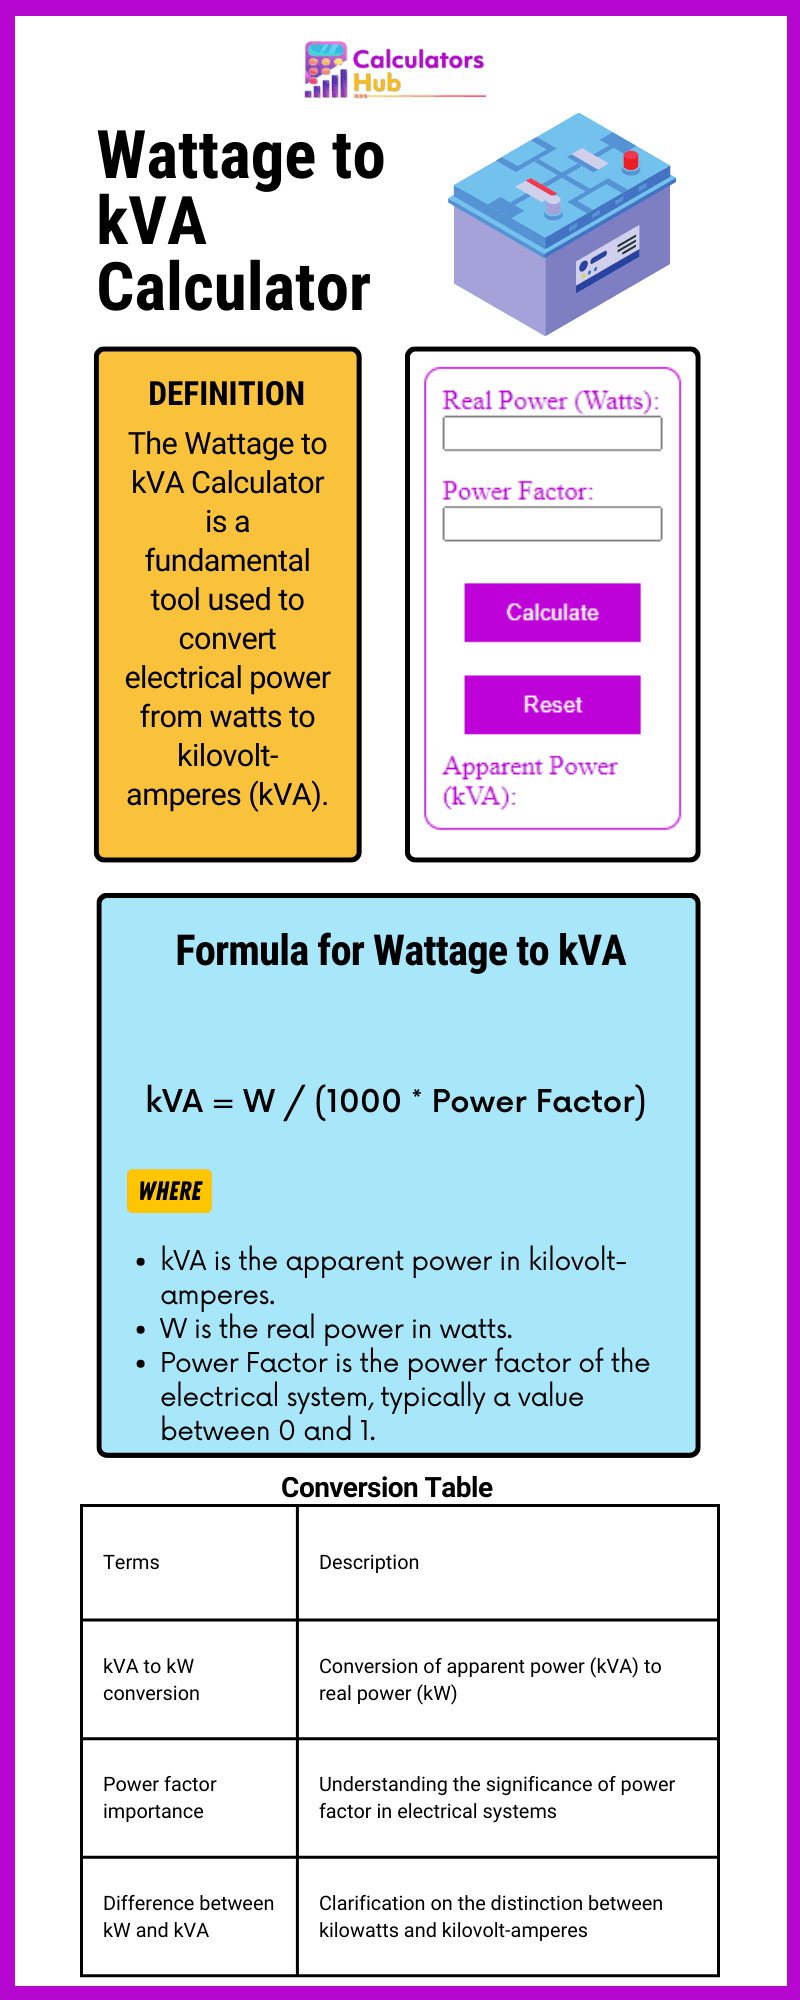 Wattage to kVA Calculator